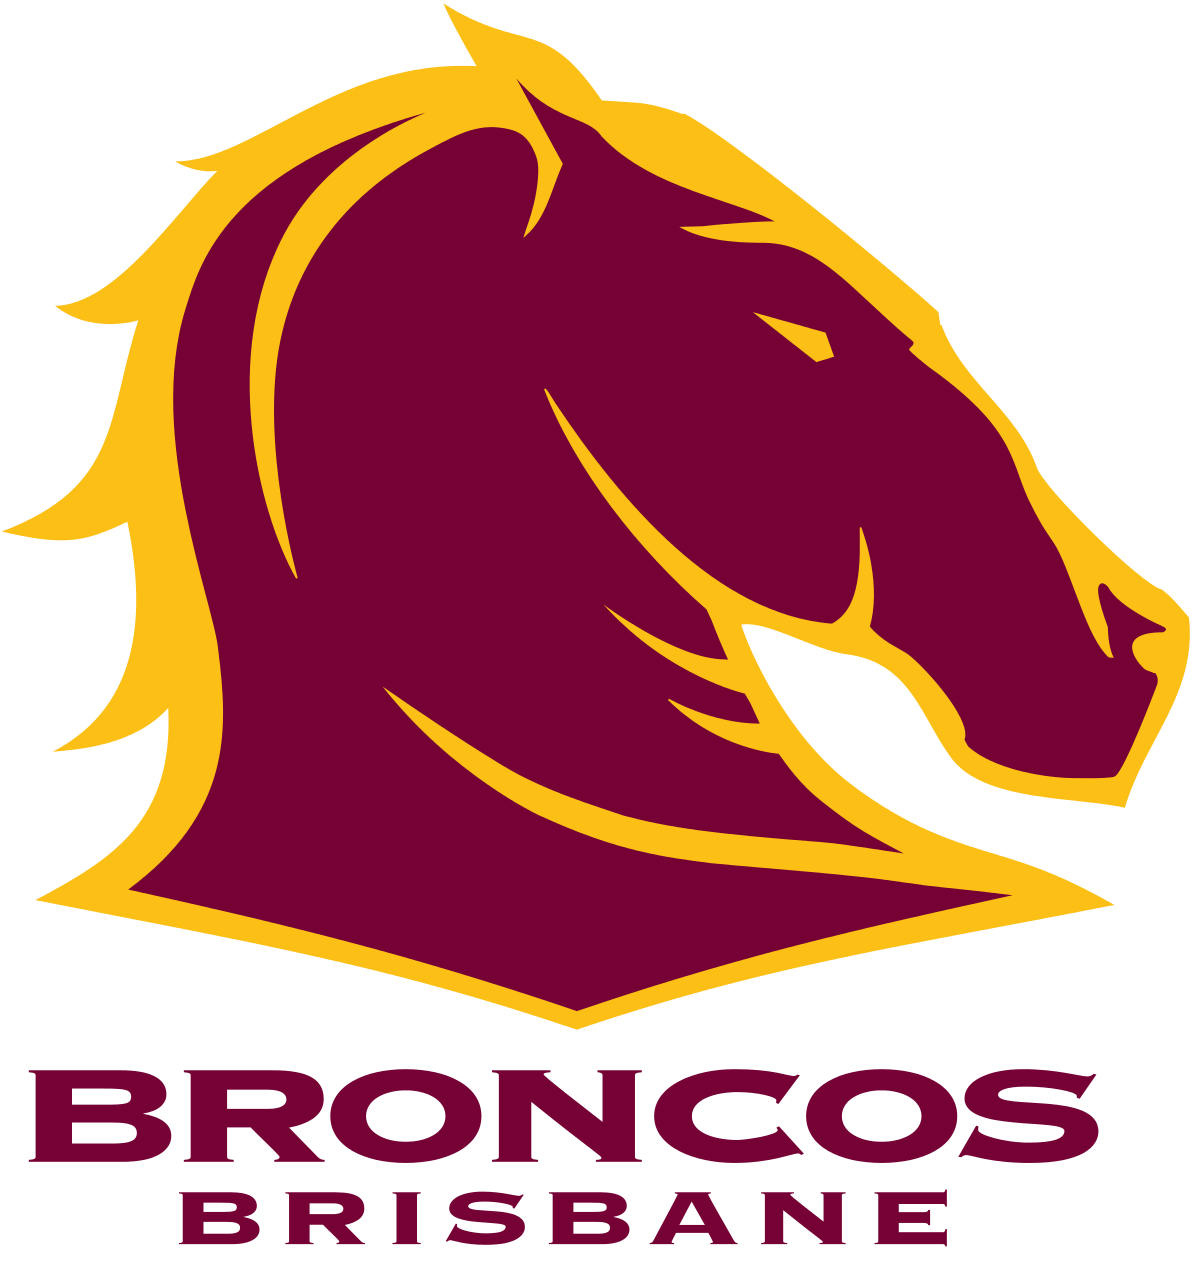 Broncos Logo - upload.wikimedia.org/wikipedia/en/thumb/a/ad/Brisb...